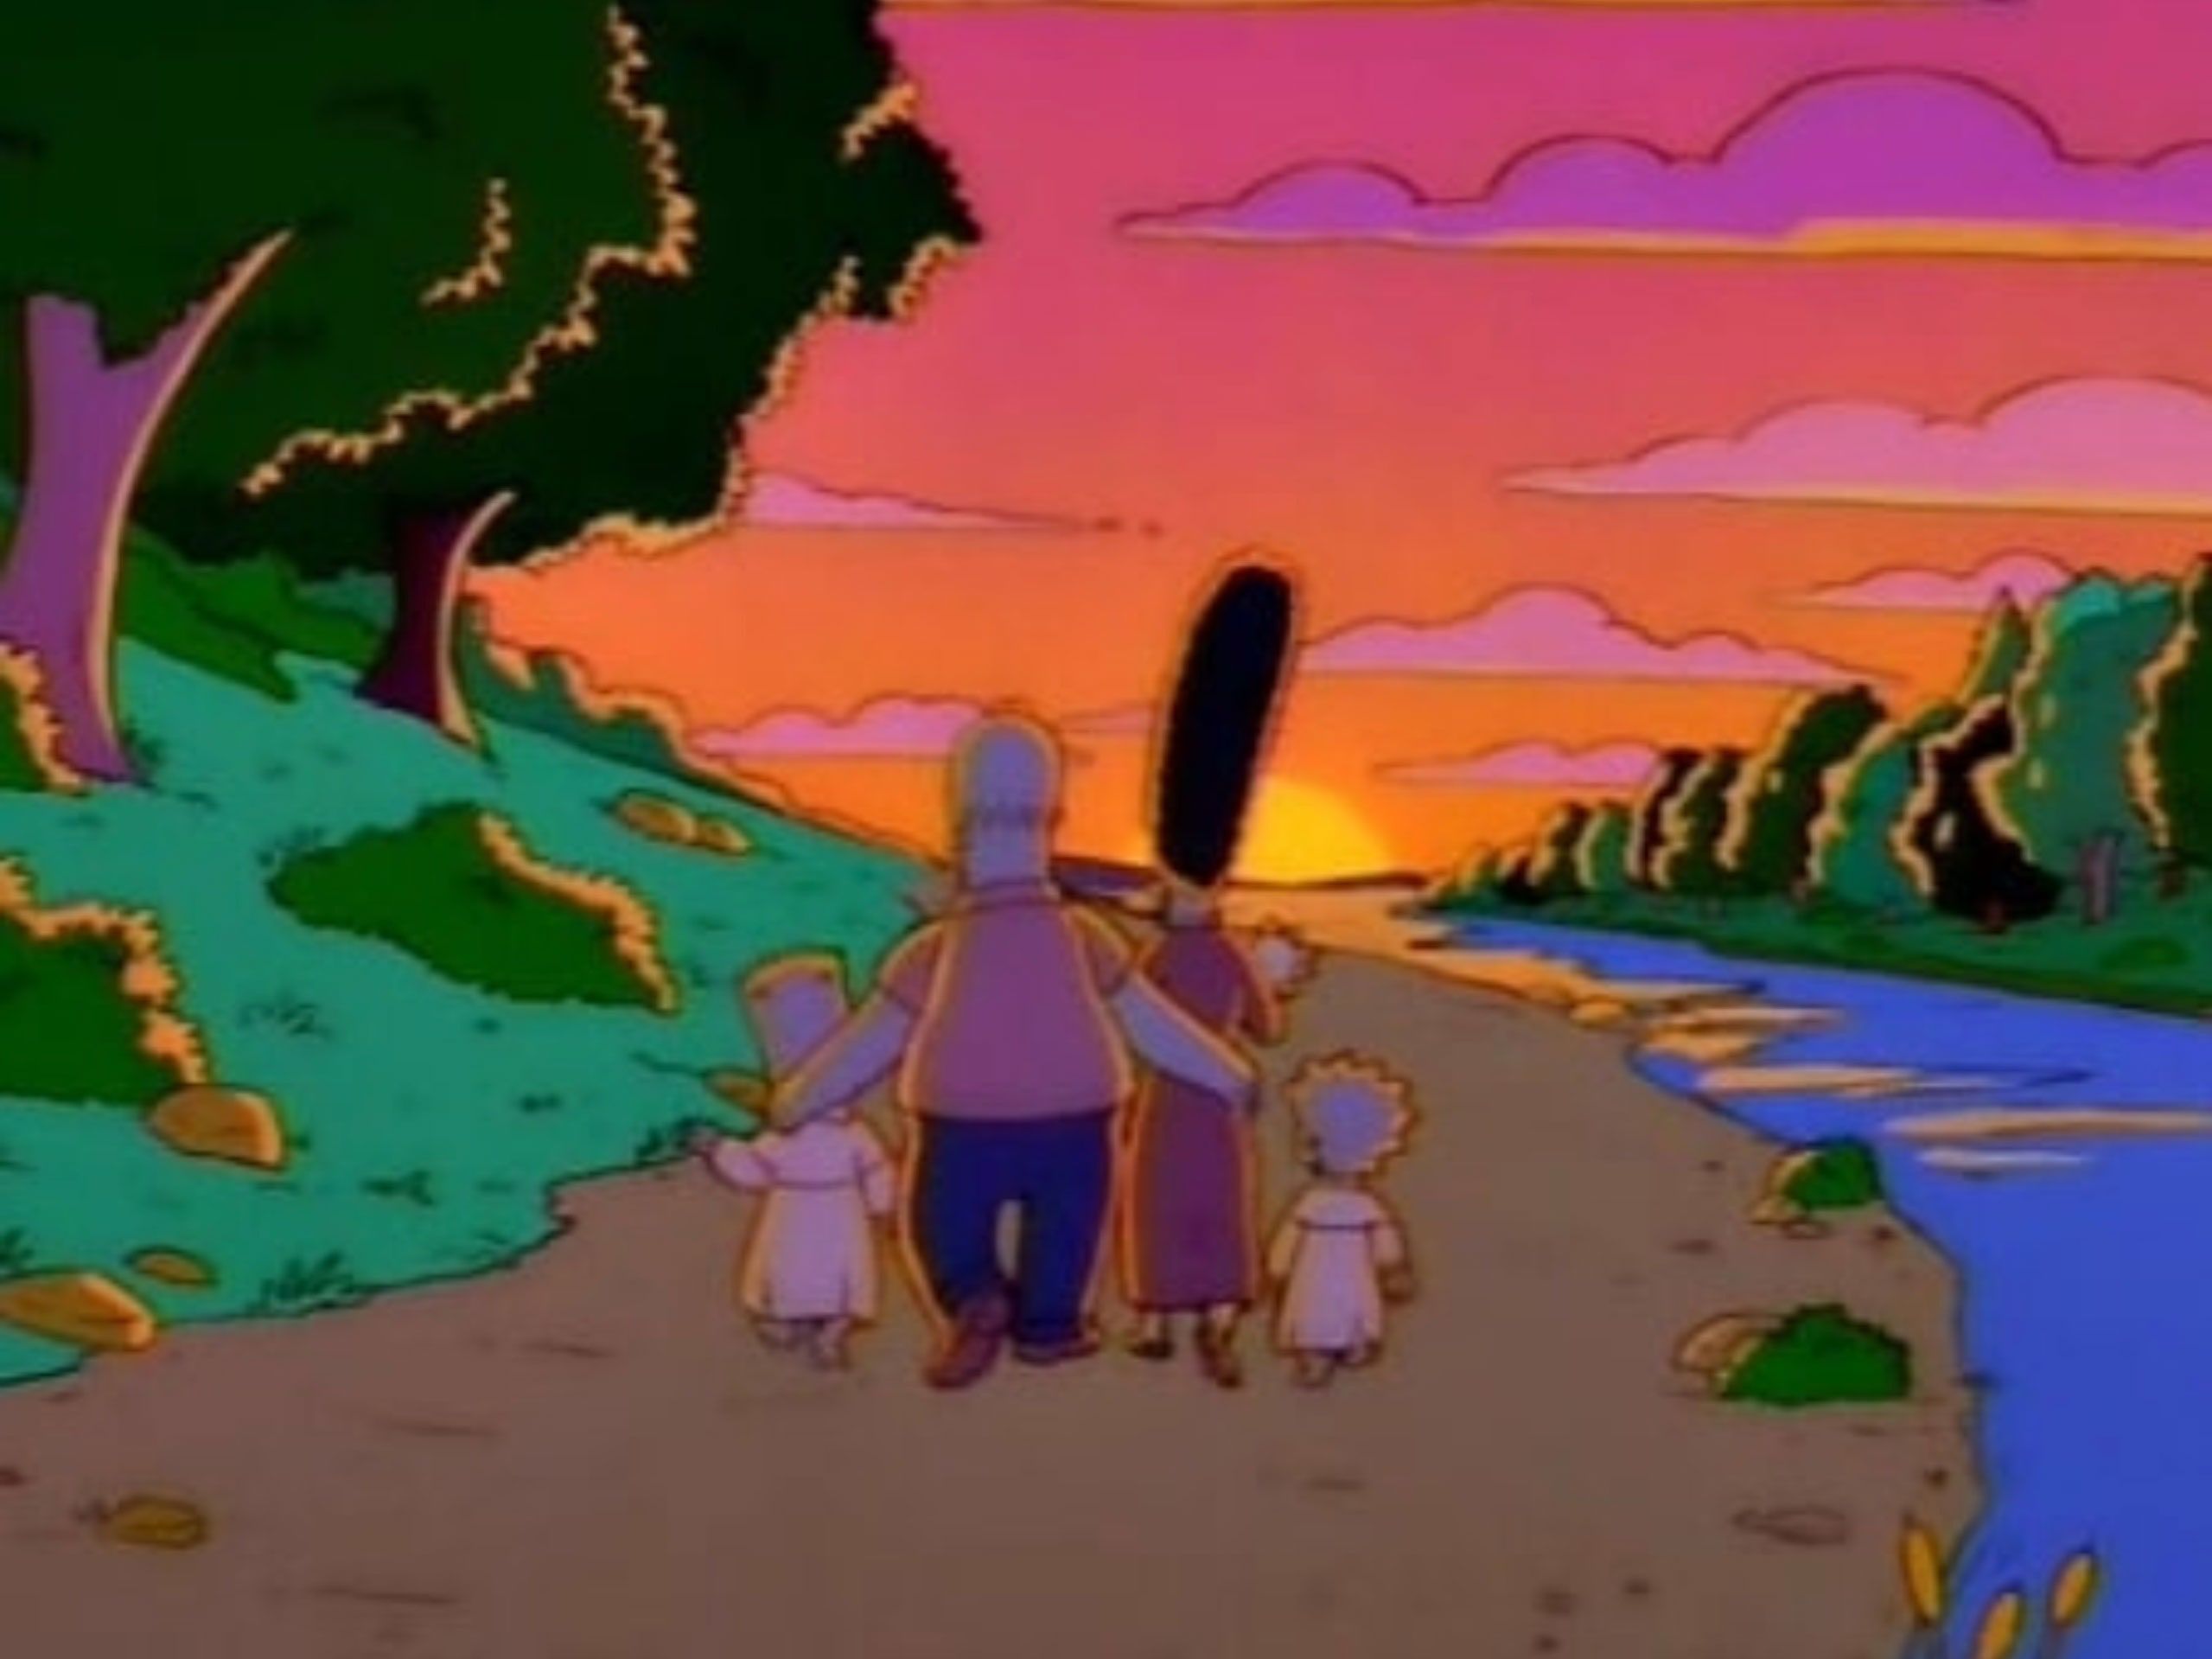 The Aesthetic Splendor of “The Simpsons